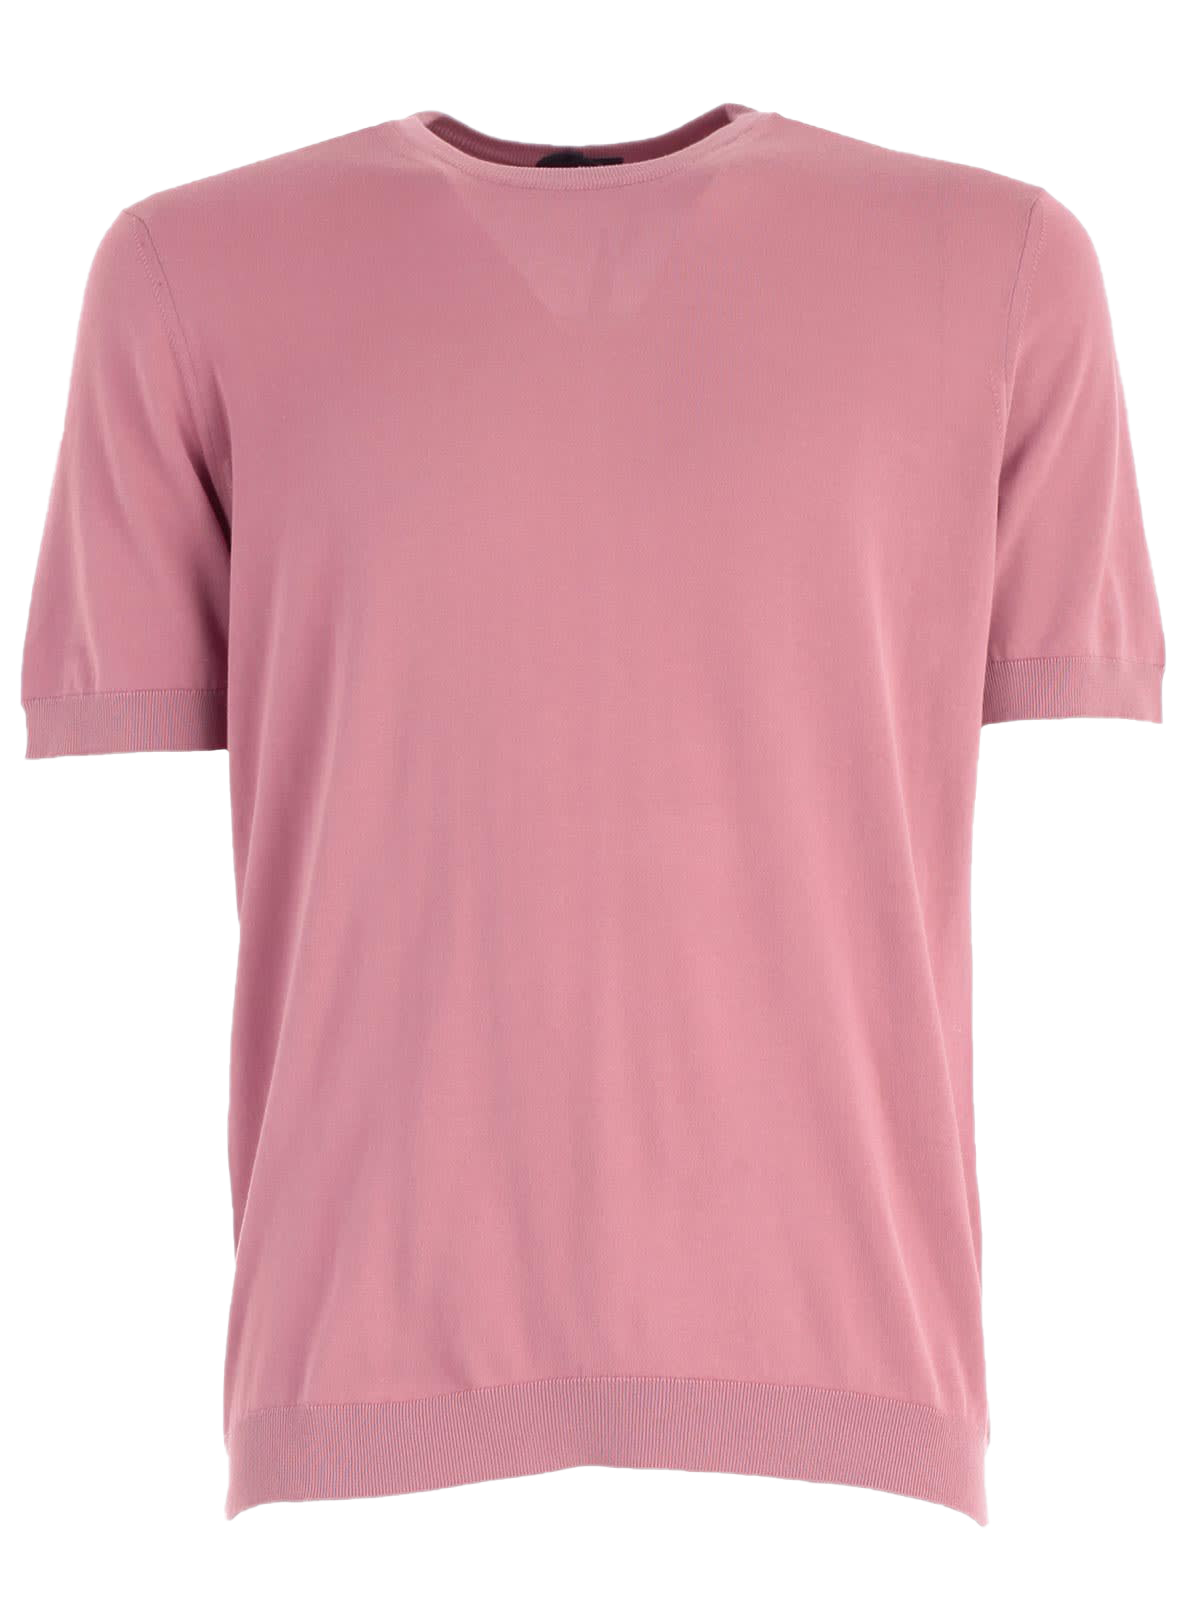 Download t-shirt pink pcs PNG unduh Gratis